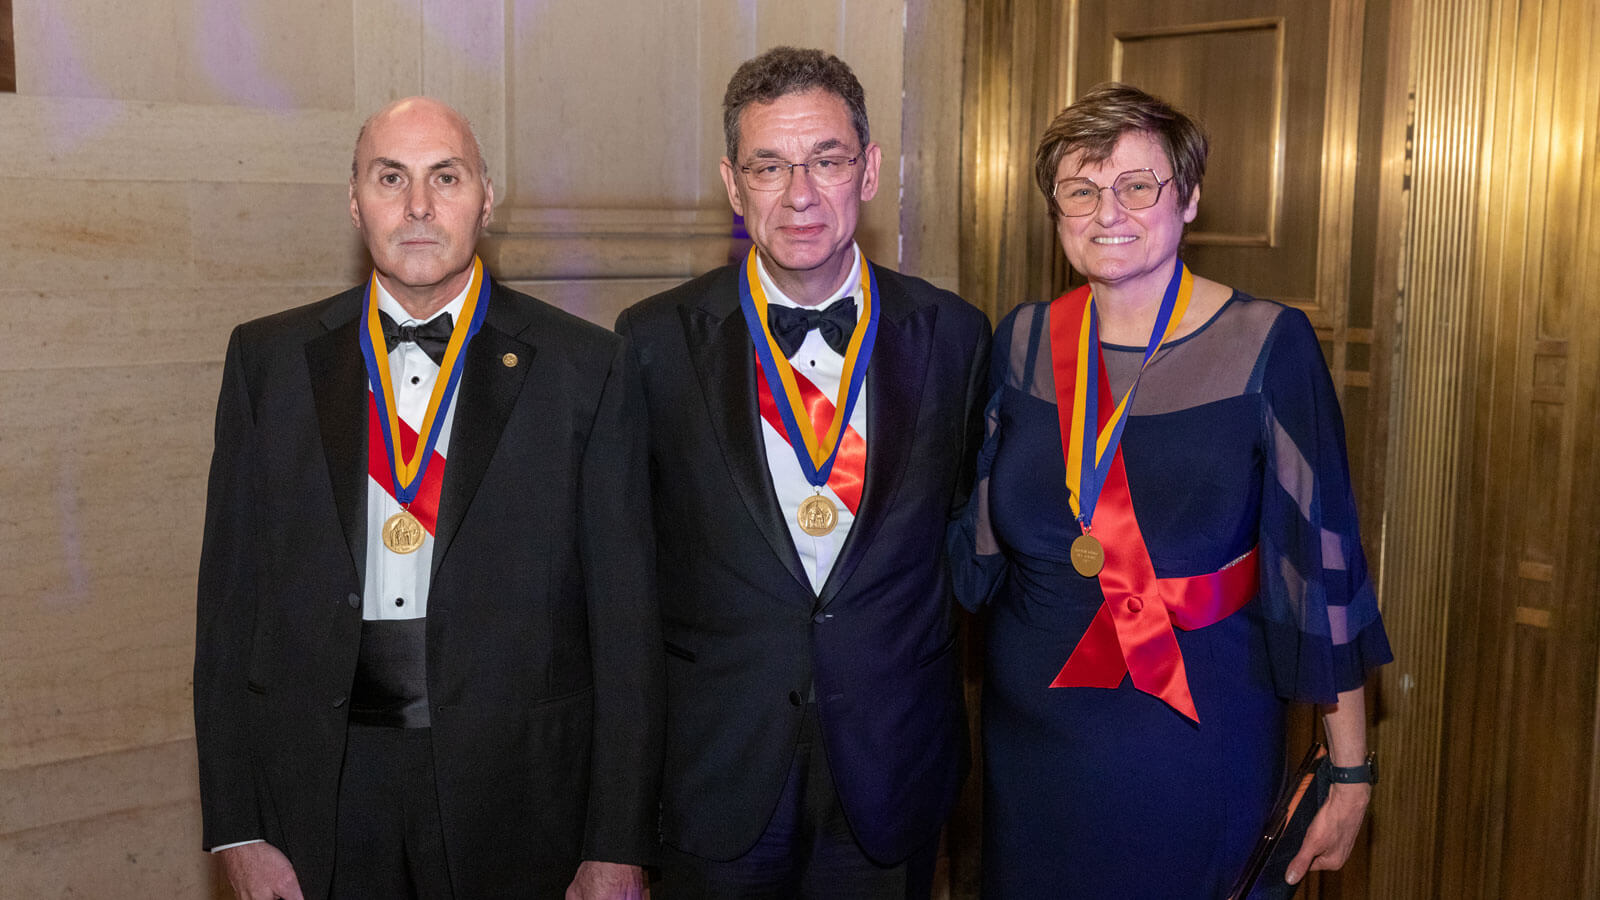 Drew Weissman, Albert Bourla, and Katalin Karikó, 2022 Franklin Institute Awards ceremony